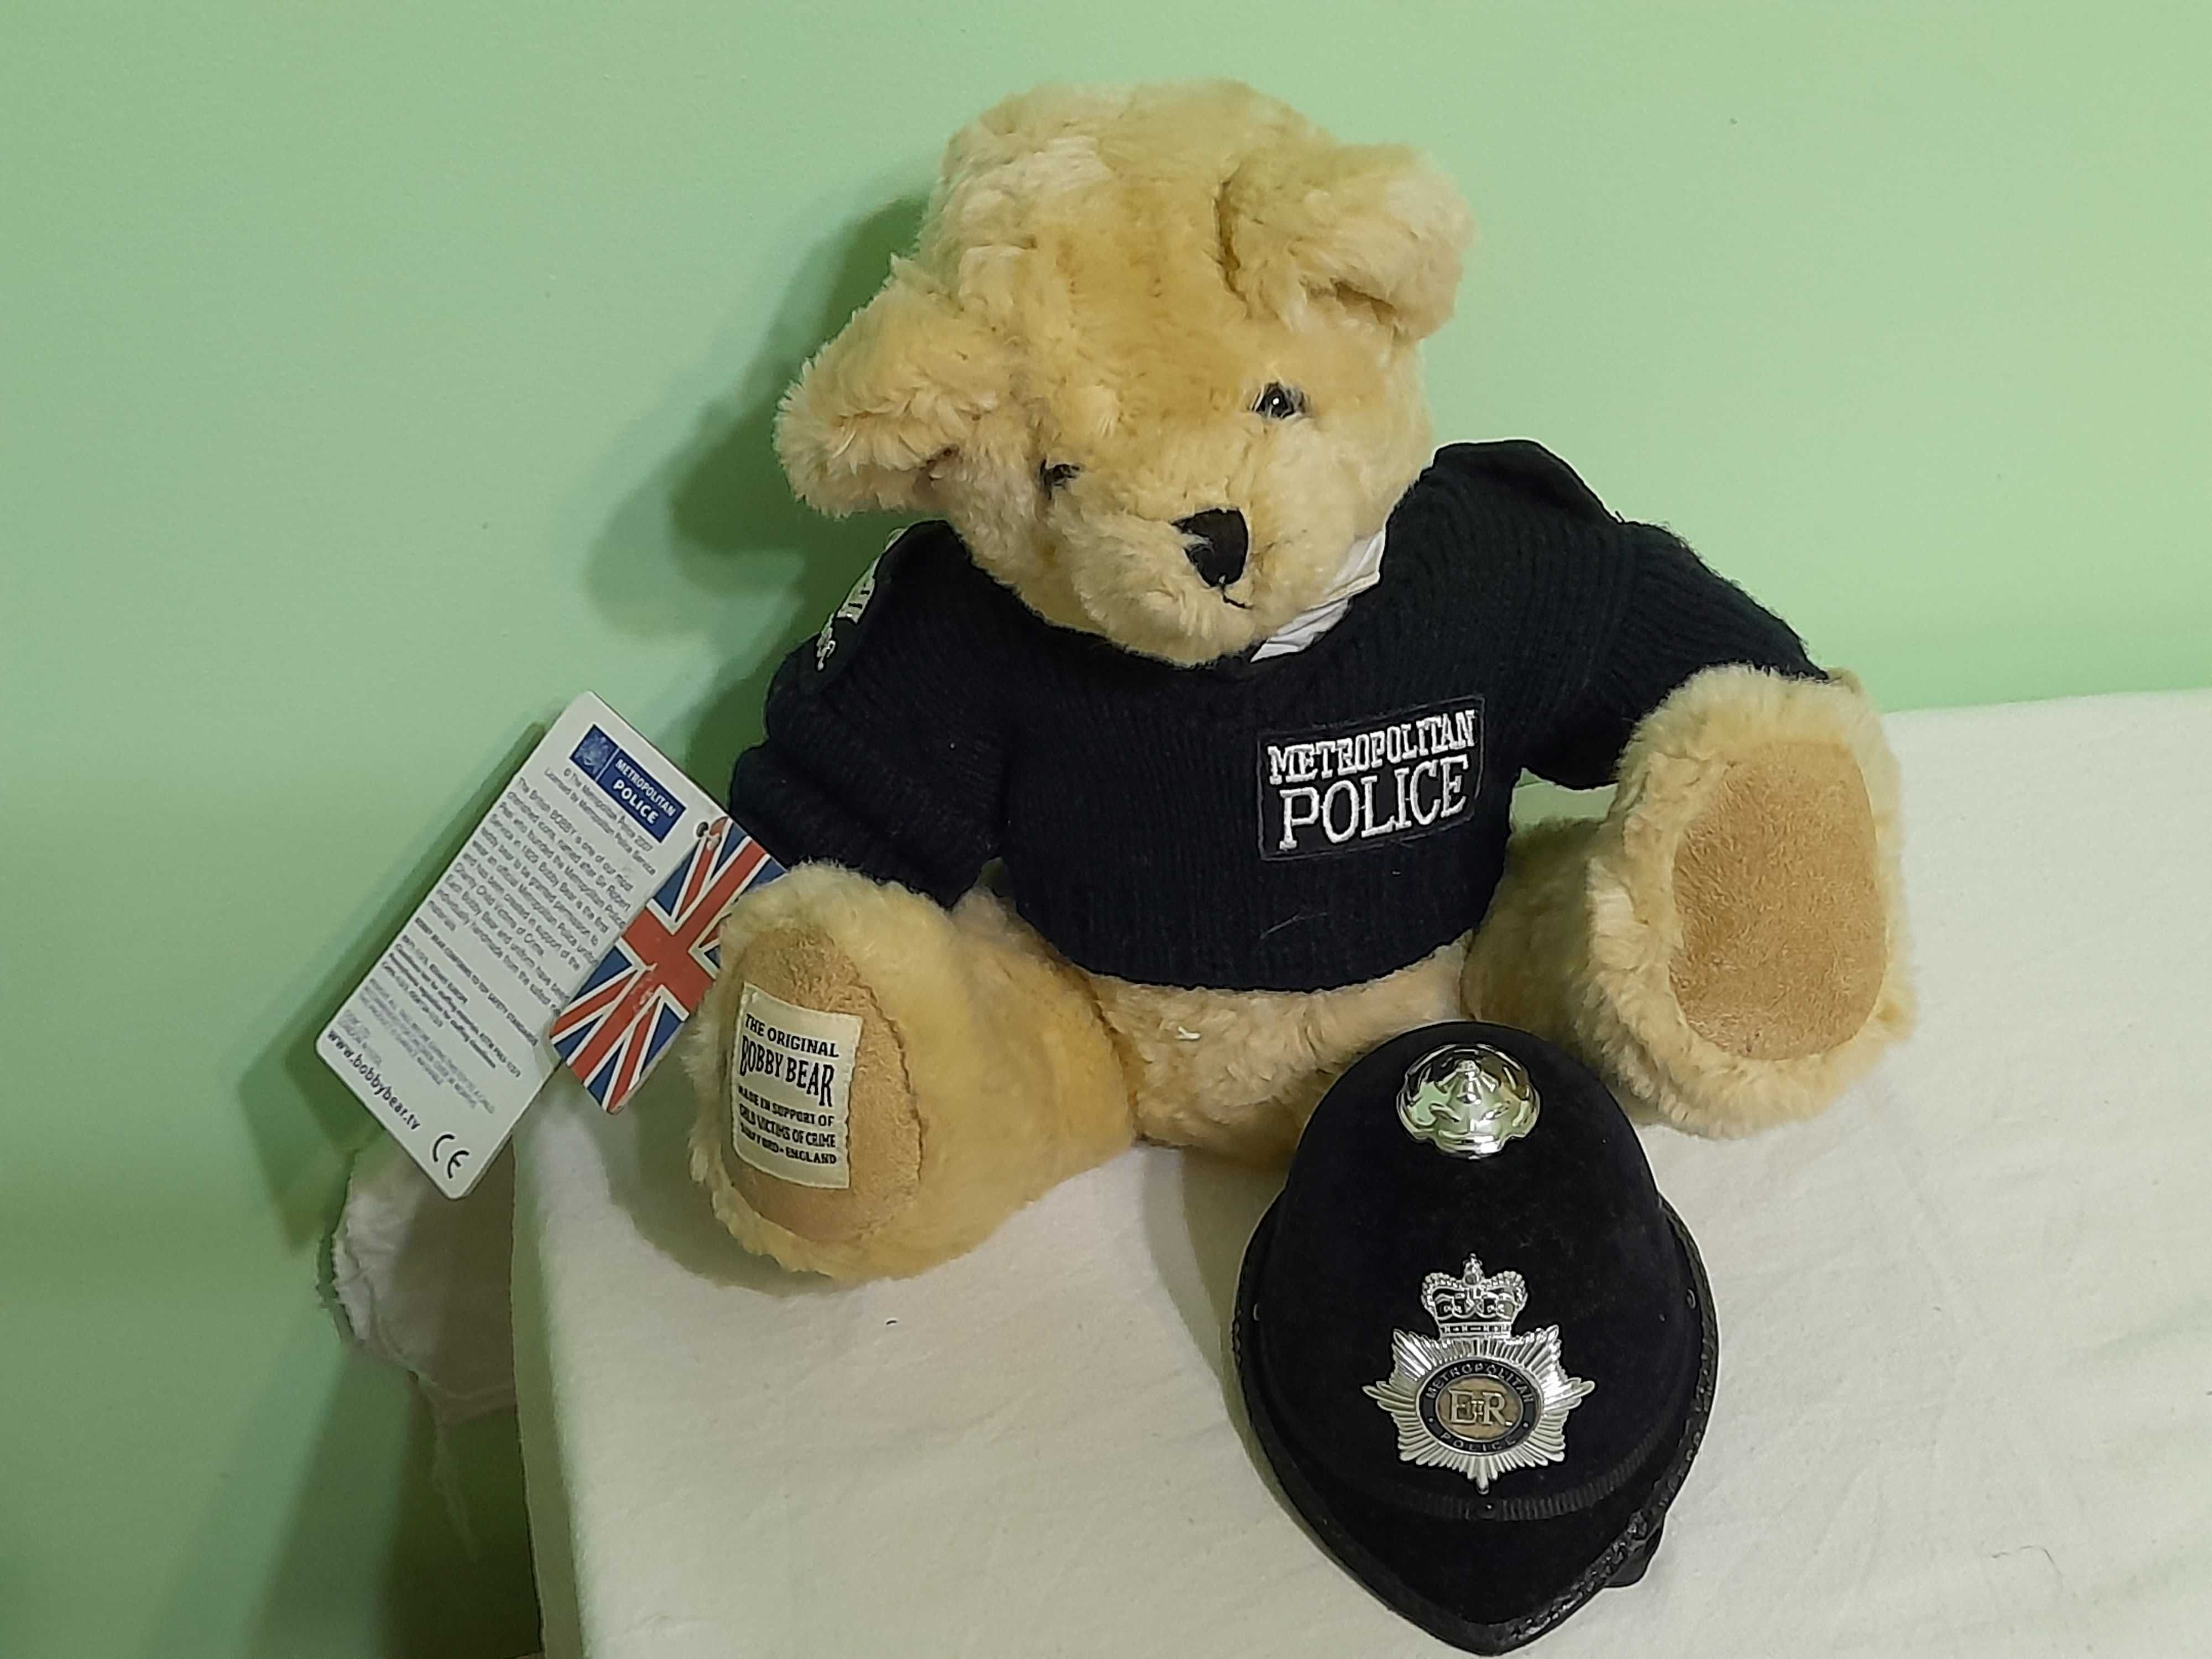 на англ. - Metropolitan Police Bobby Bear